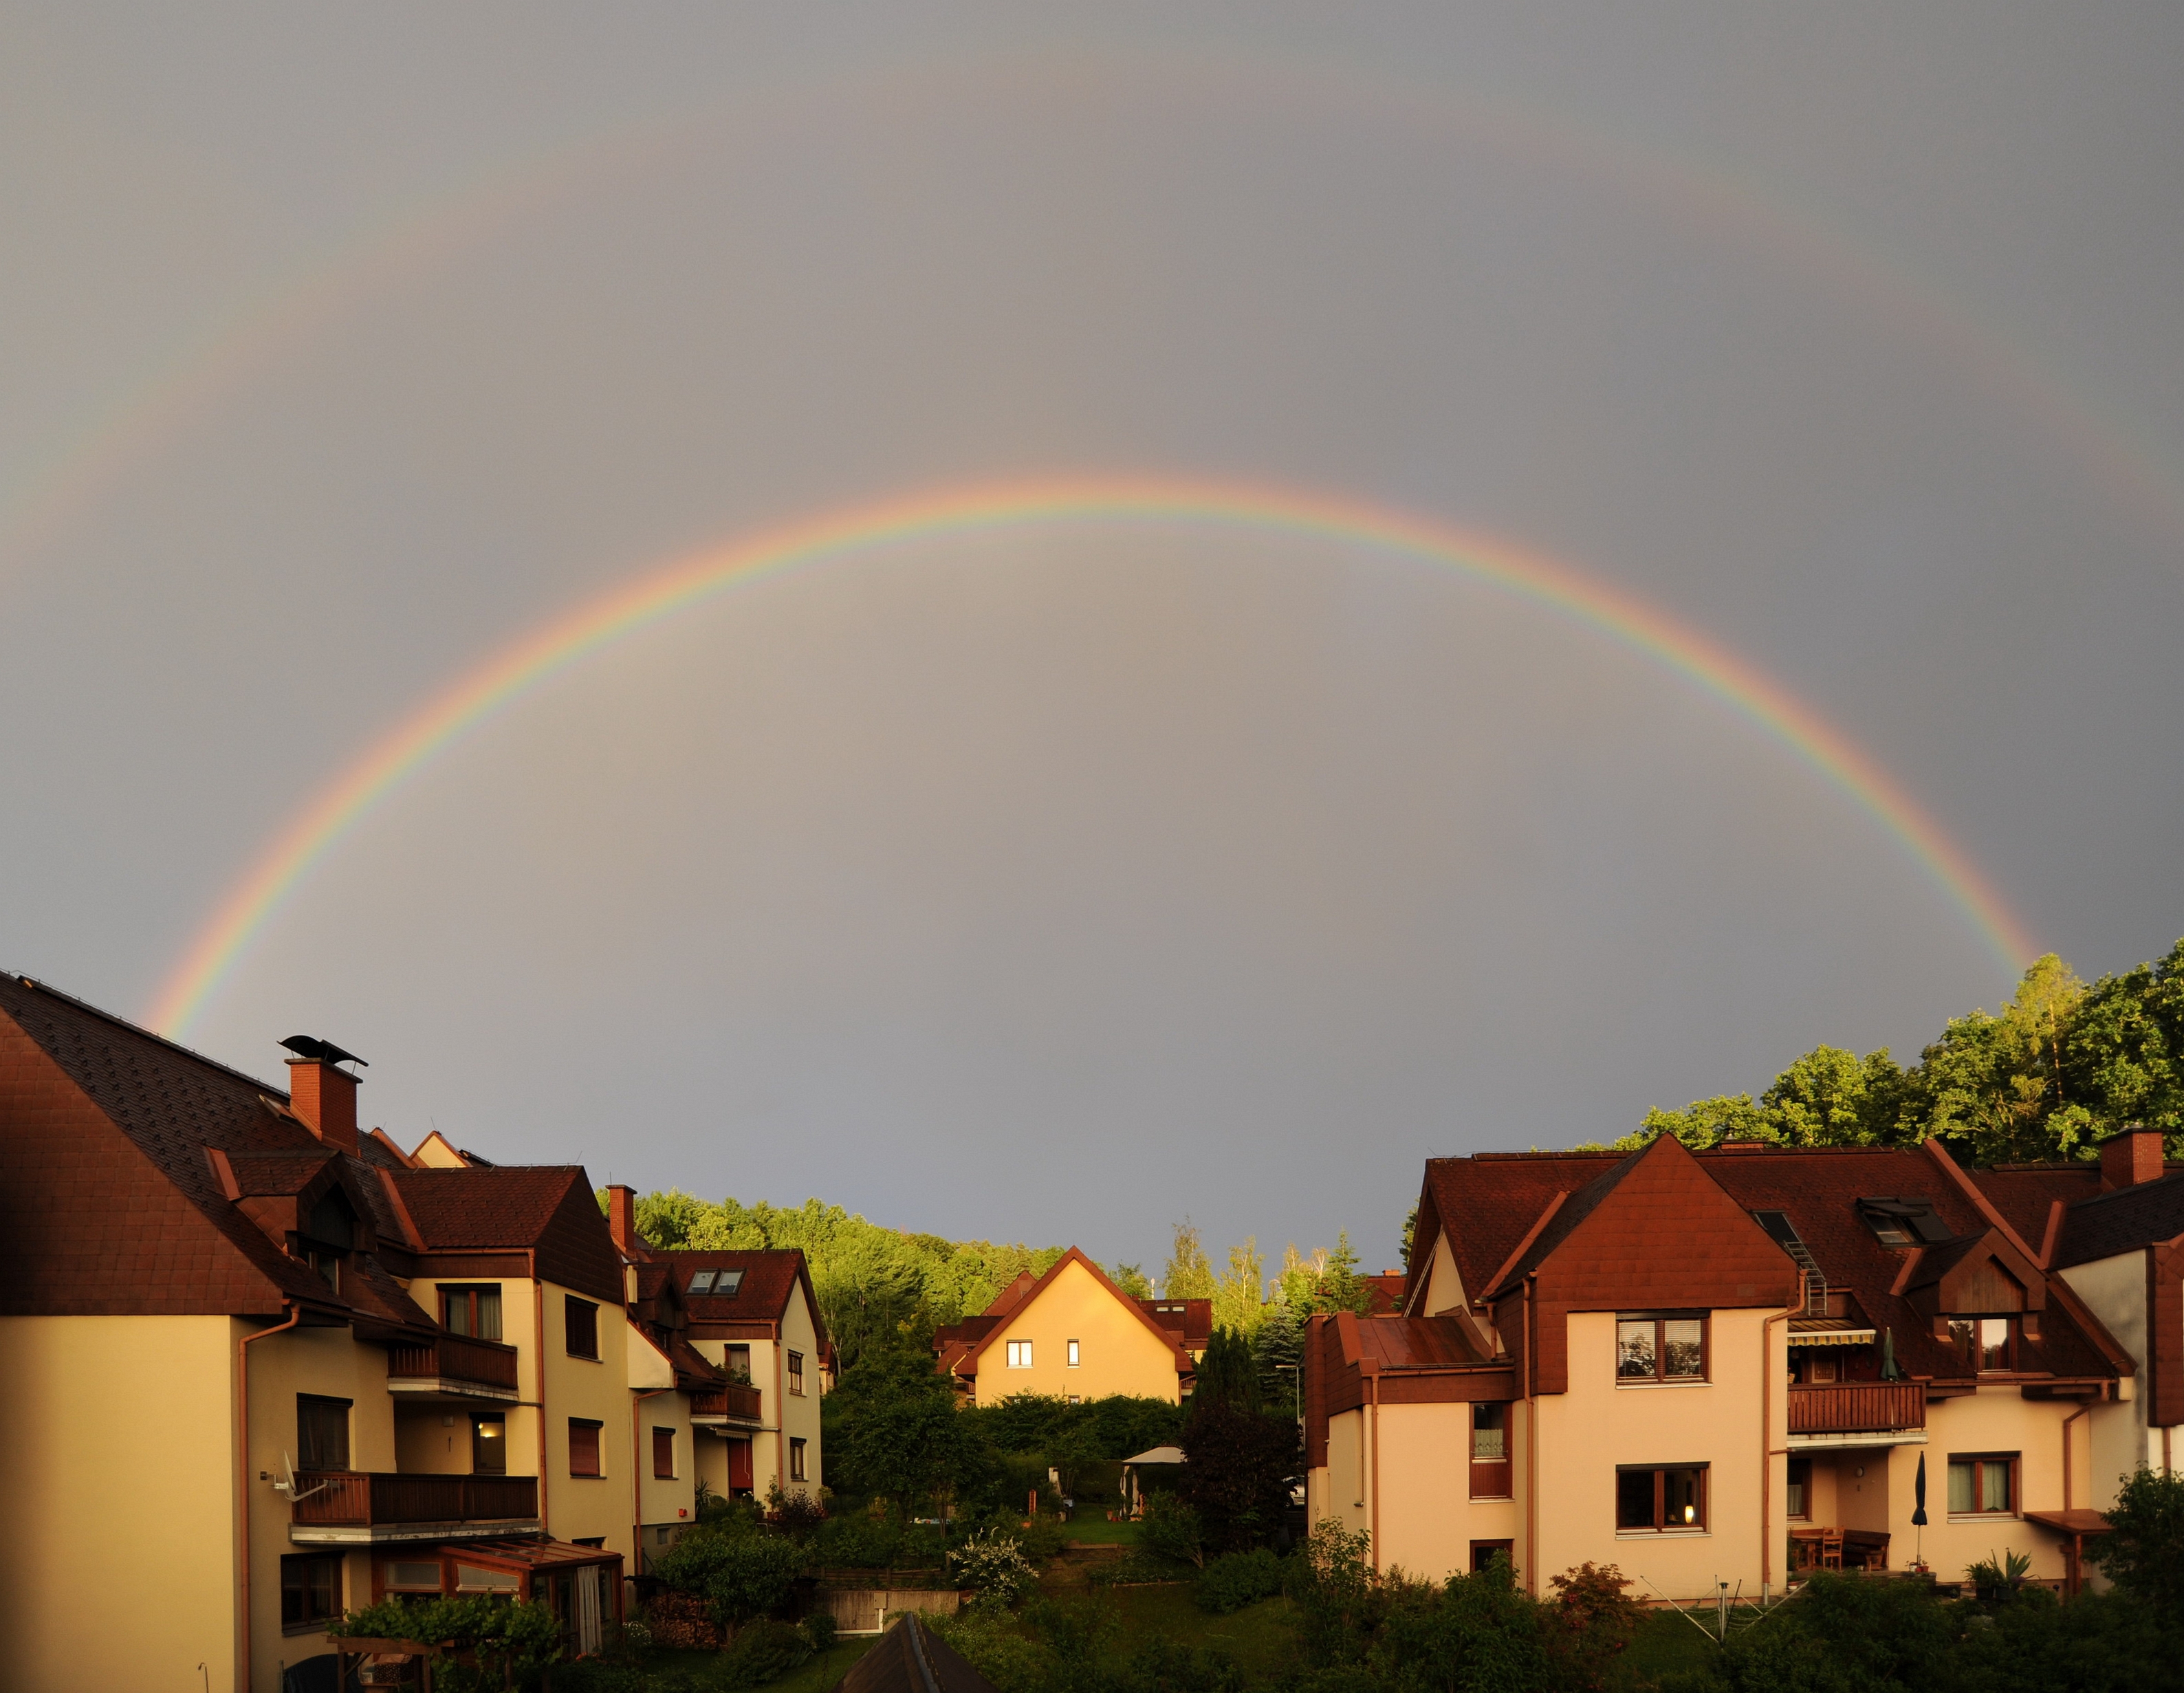 Double rainbow, Graz, Austria, 2010-05-30